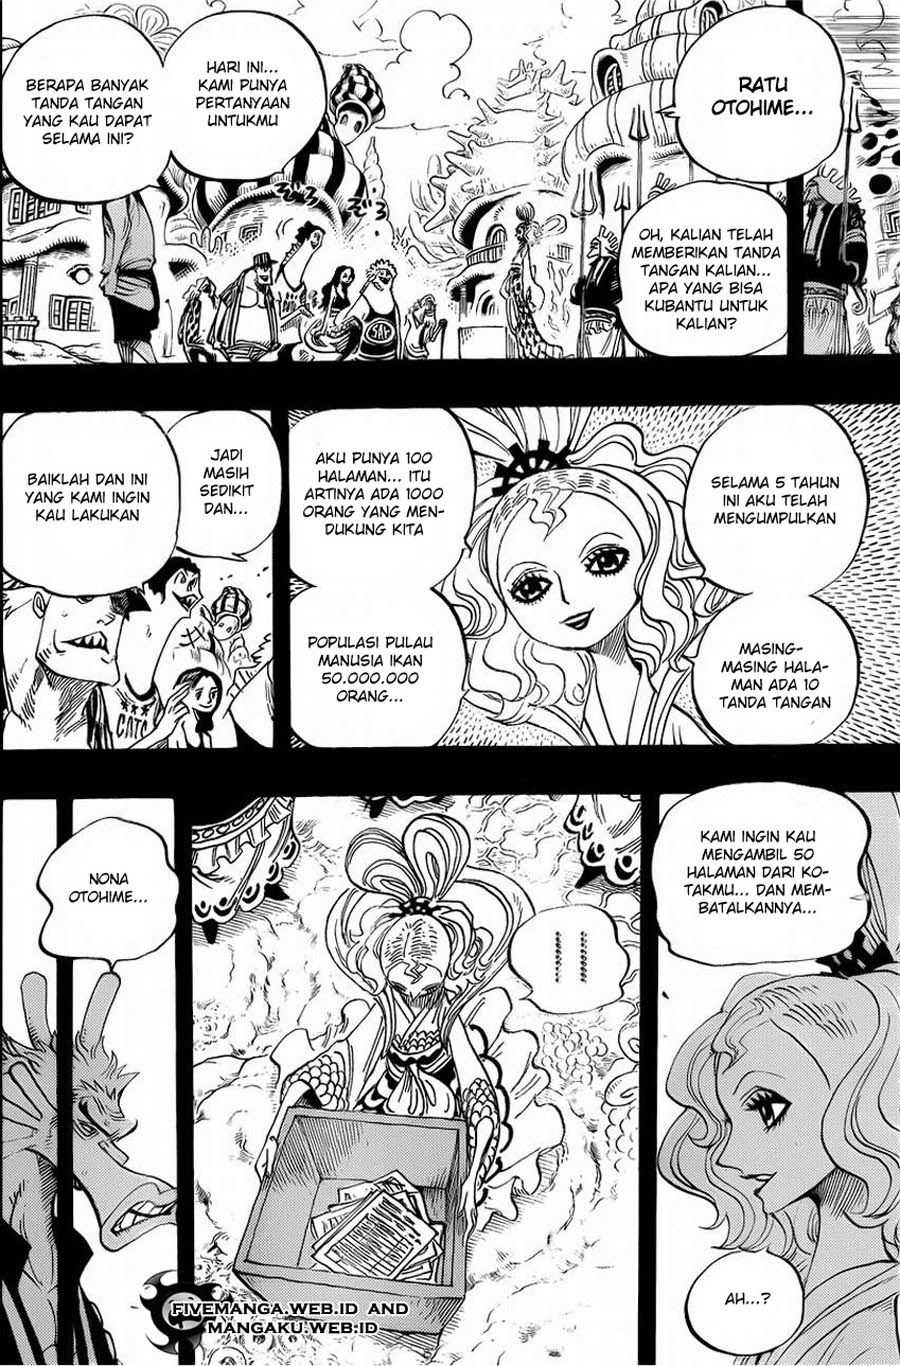 One Piece Chapter 624 – Ratu Otohime - 123